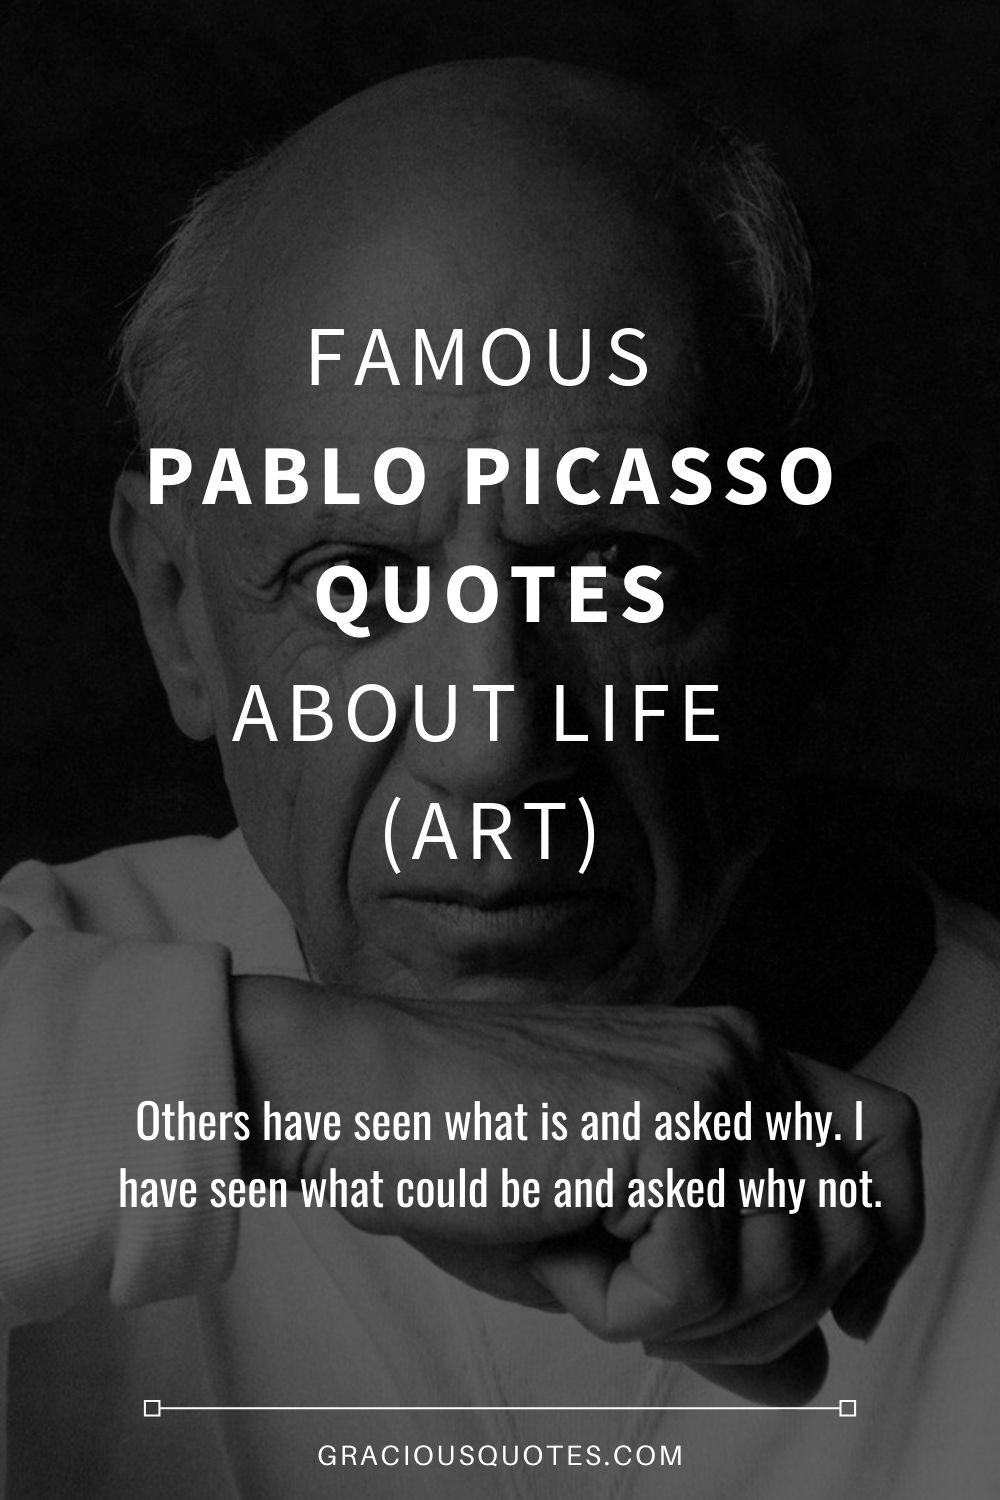 Famous Pablo Picasso Quotes About Life (ART) - Gracious Quotes